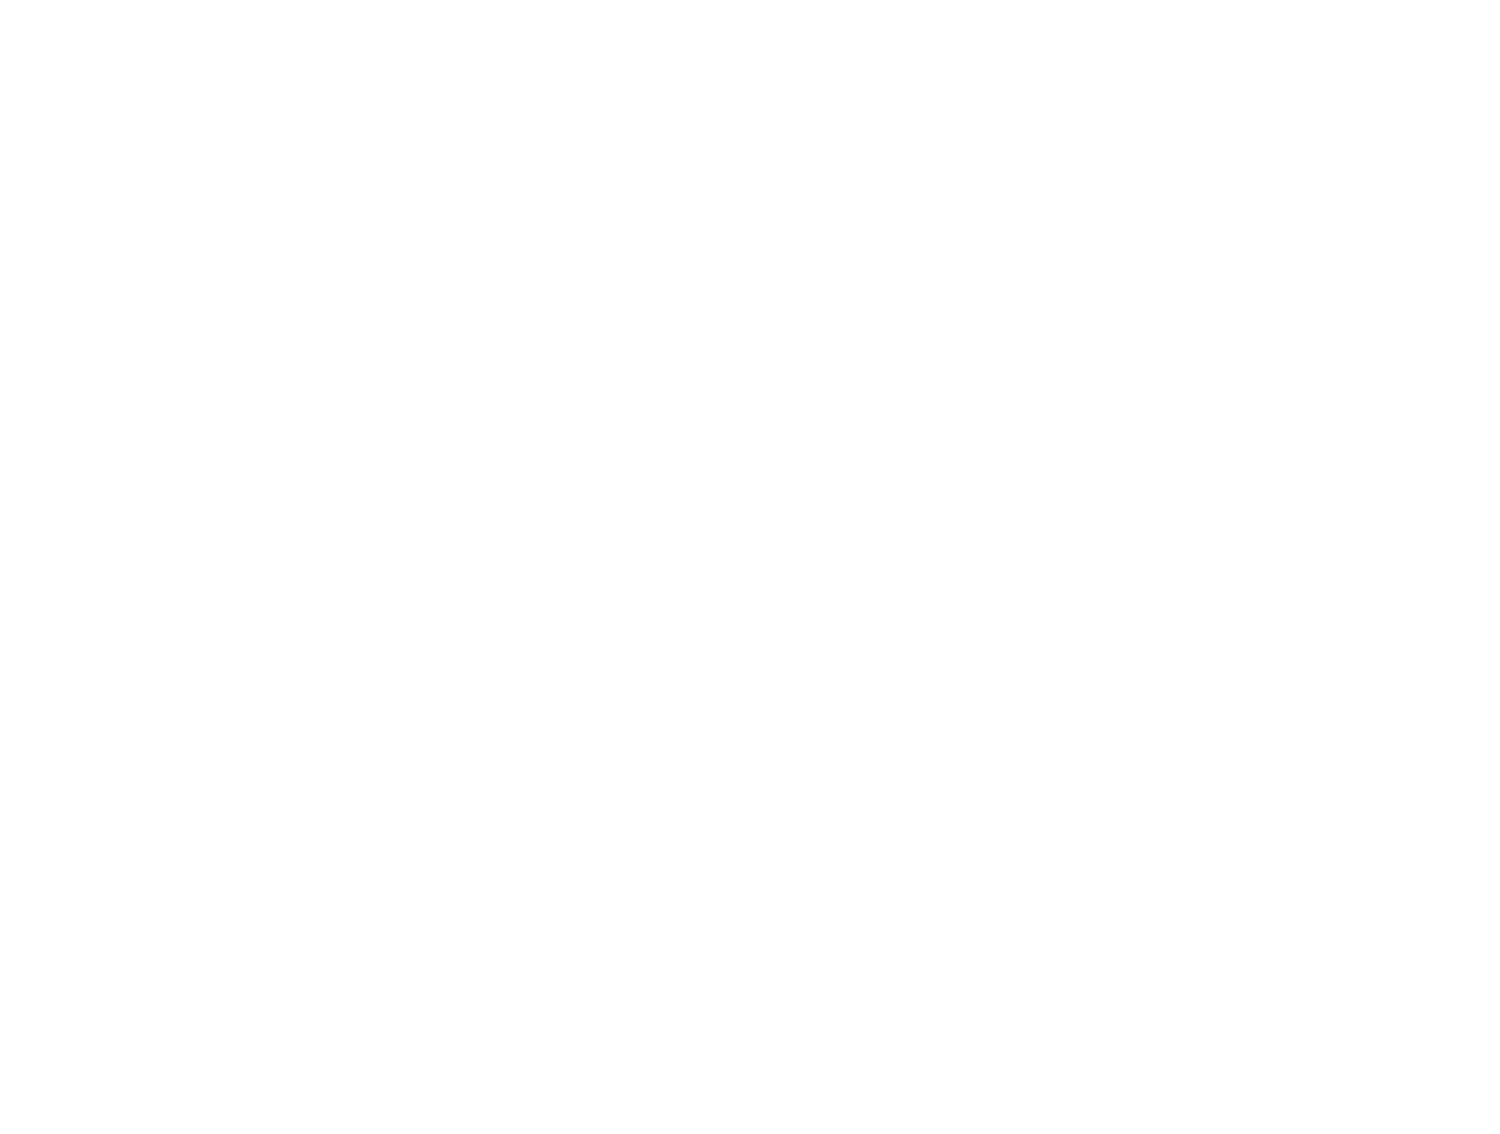 Pegasus Elite Aviation